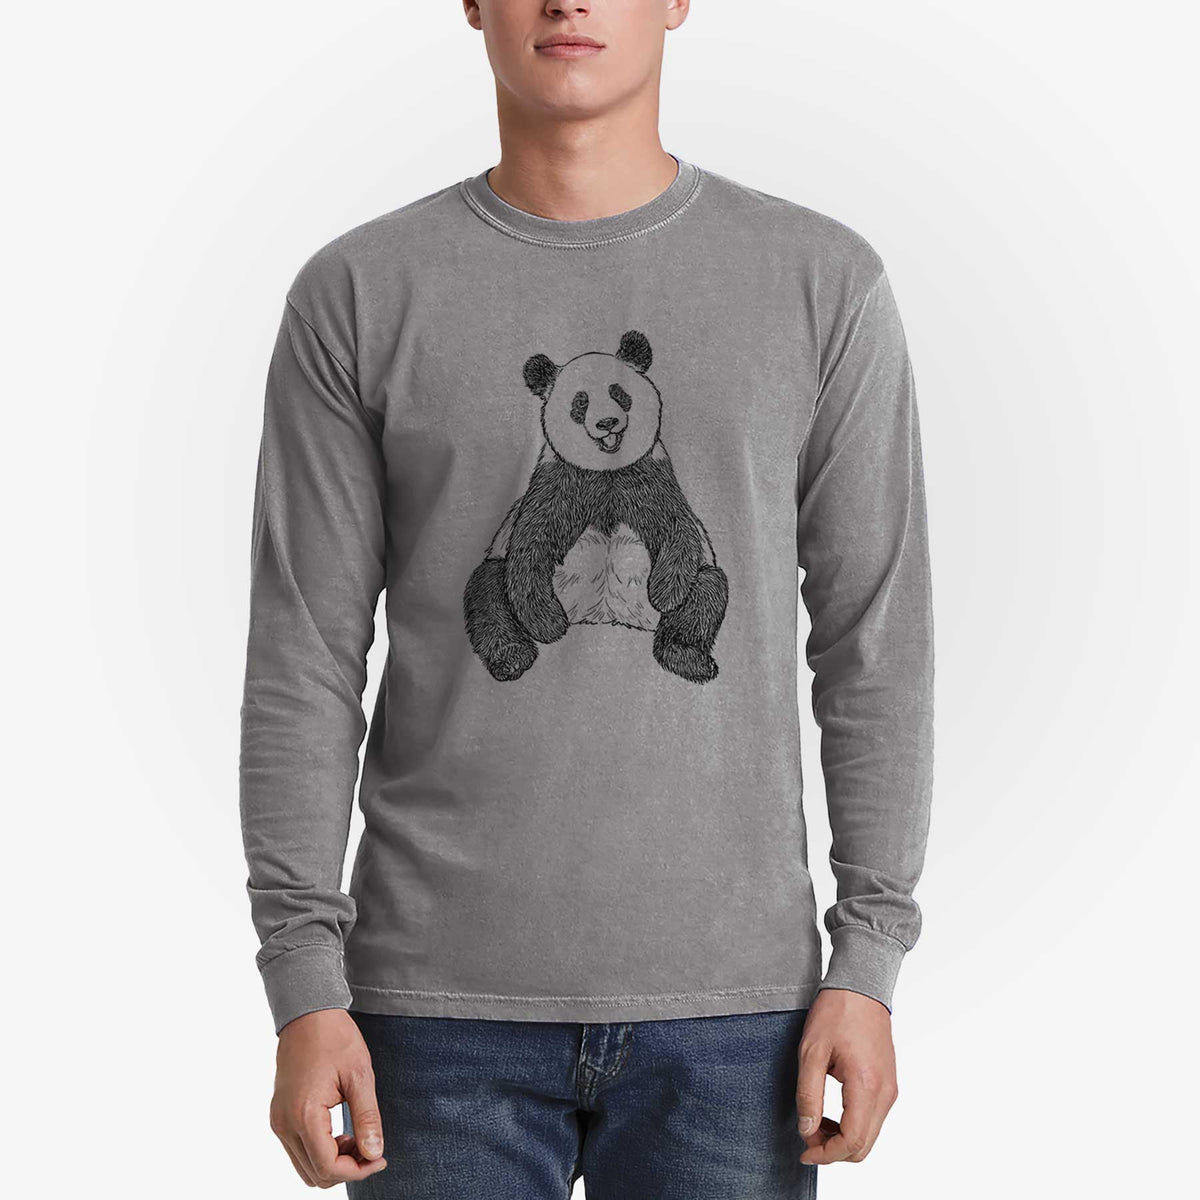 Ailuropoda melanoleuca - Giant Panda Sitting - Heavyweight 100% Cotton Long Sleeve